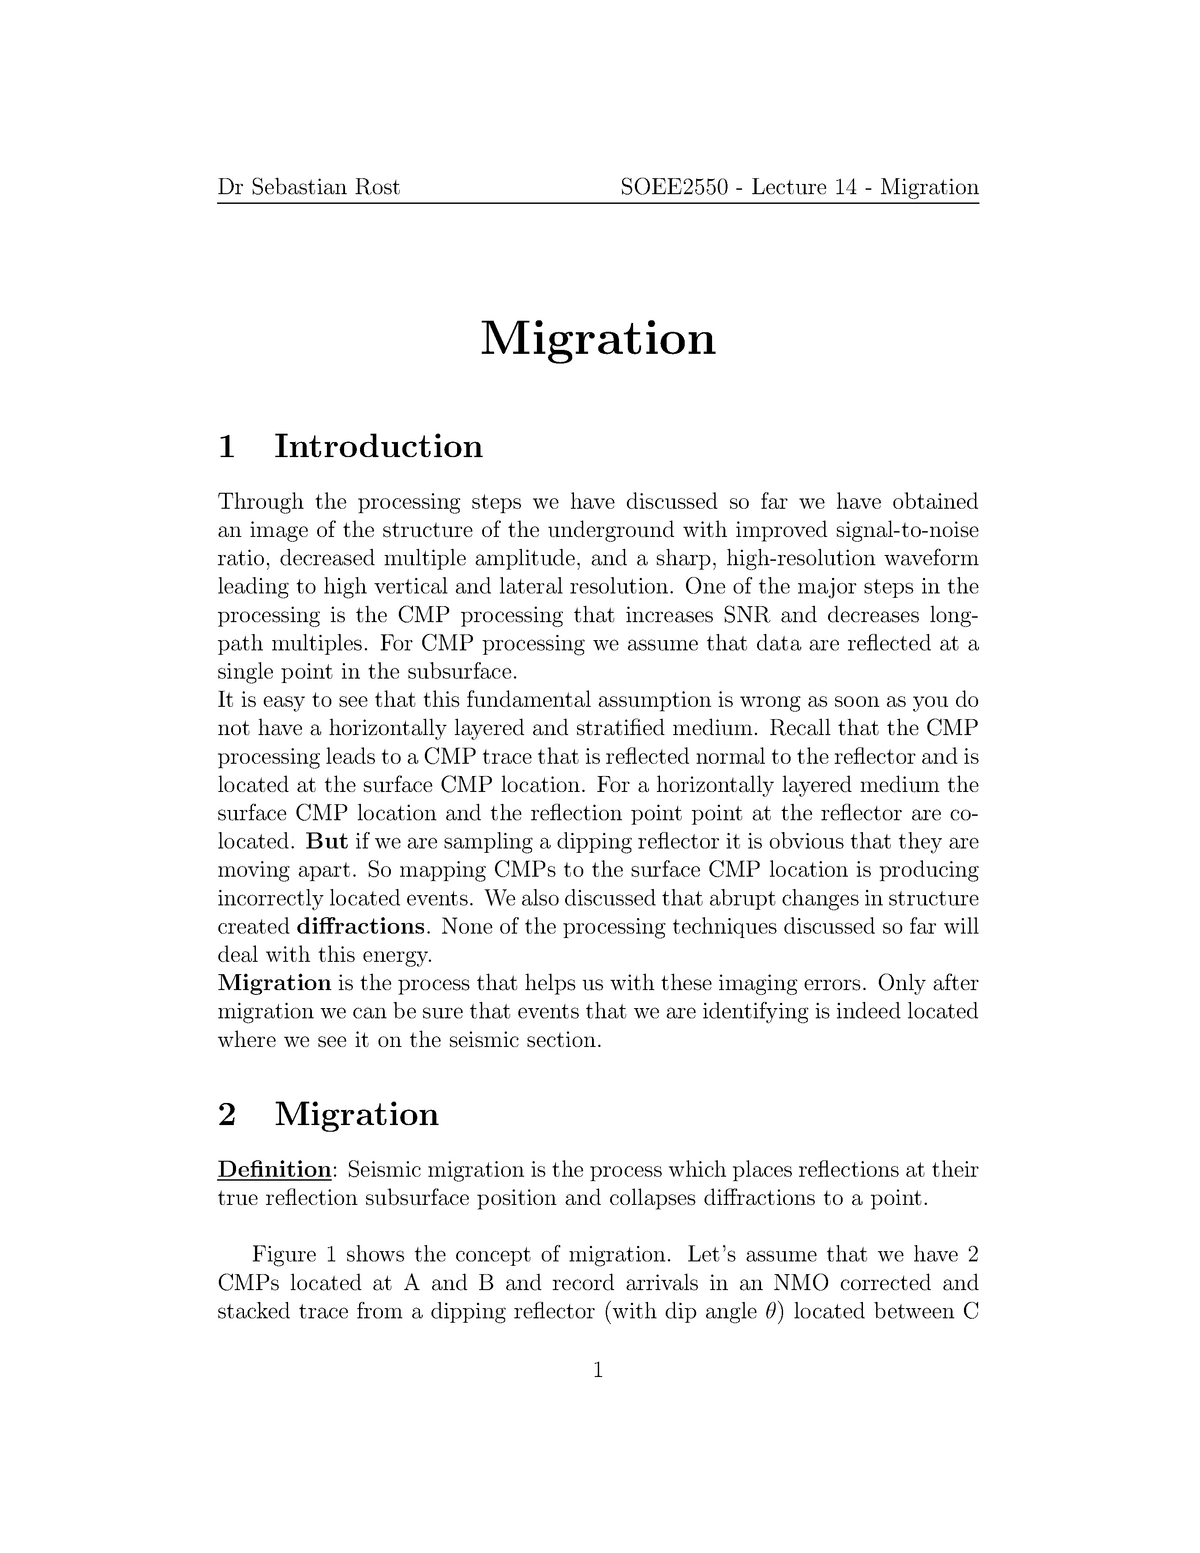 literature review about migration